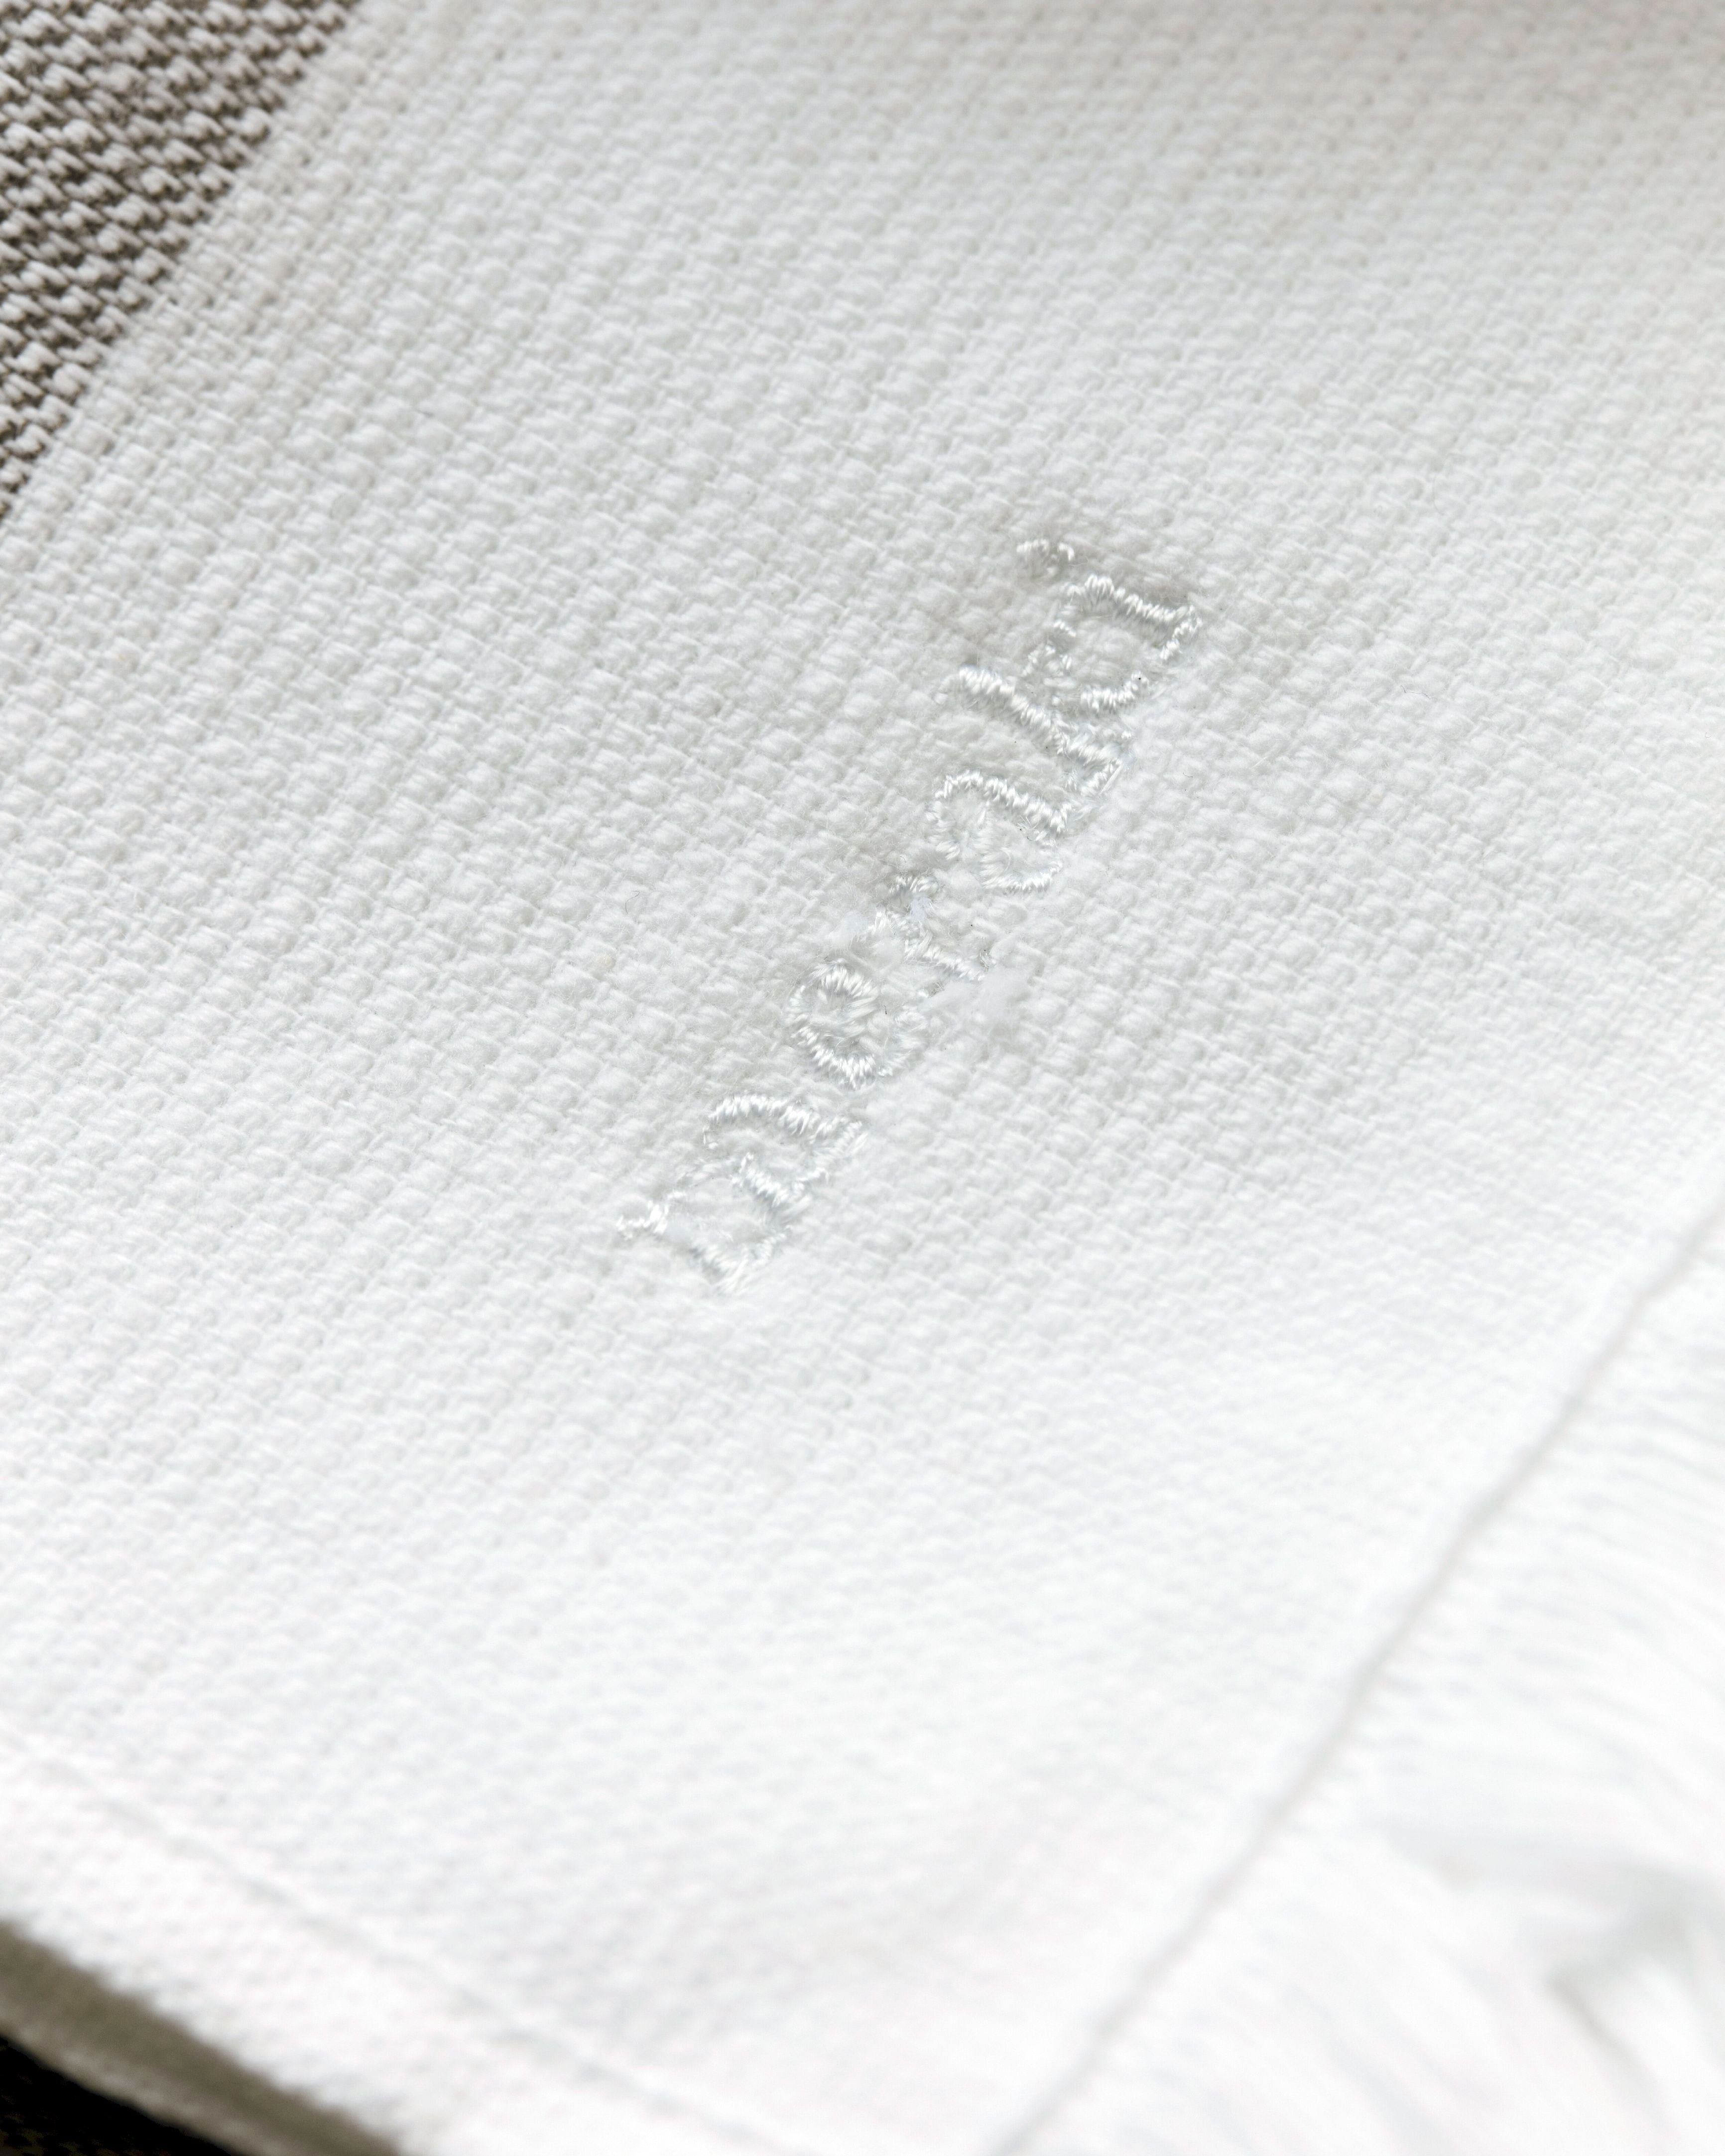 Meraki Barbarum Towel 100x180 Cm, White And Brown Stripes